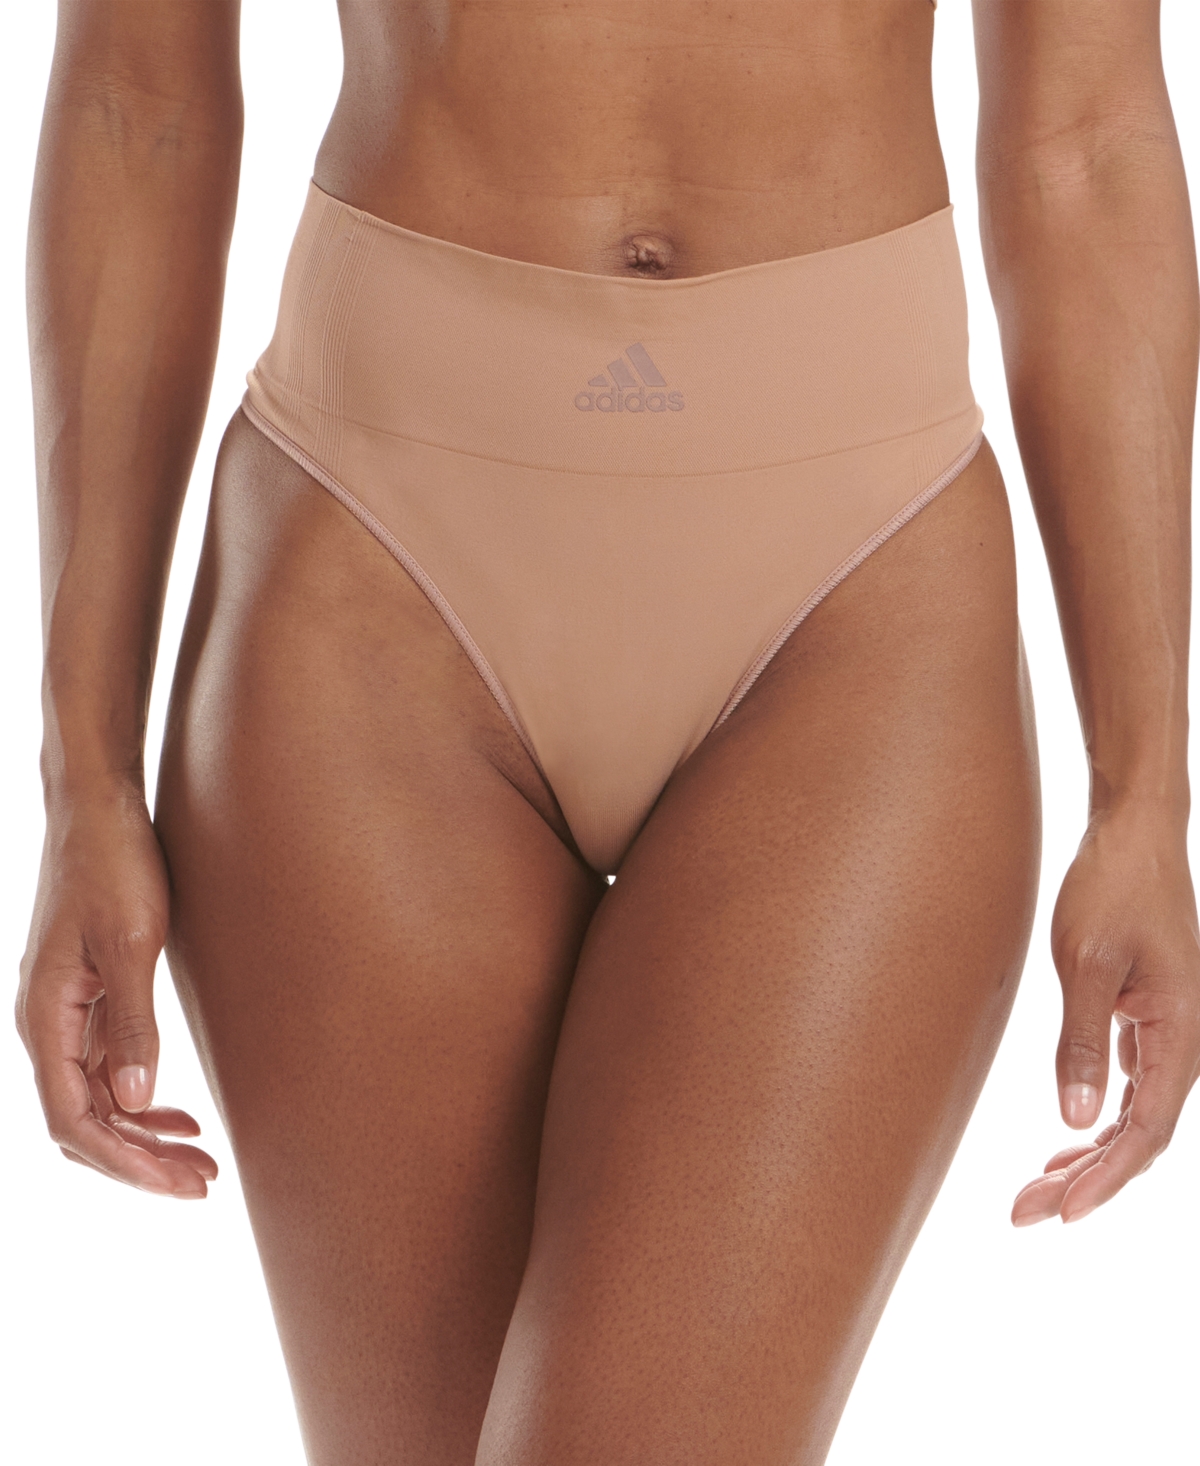 Adidas Originals Adidas Intimates Women's 720 Degree Stretch Brief Underwear  4a4h62 In Silver Violet